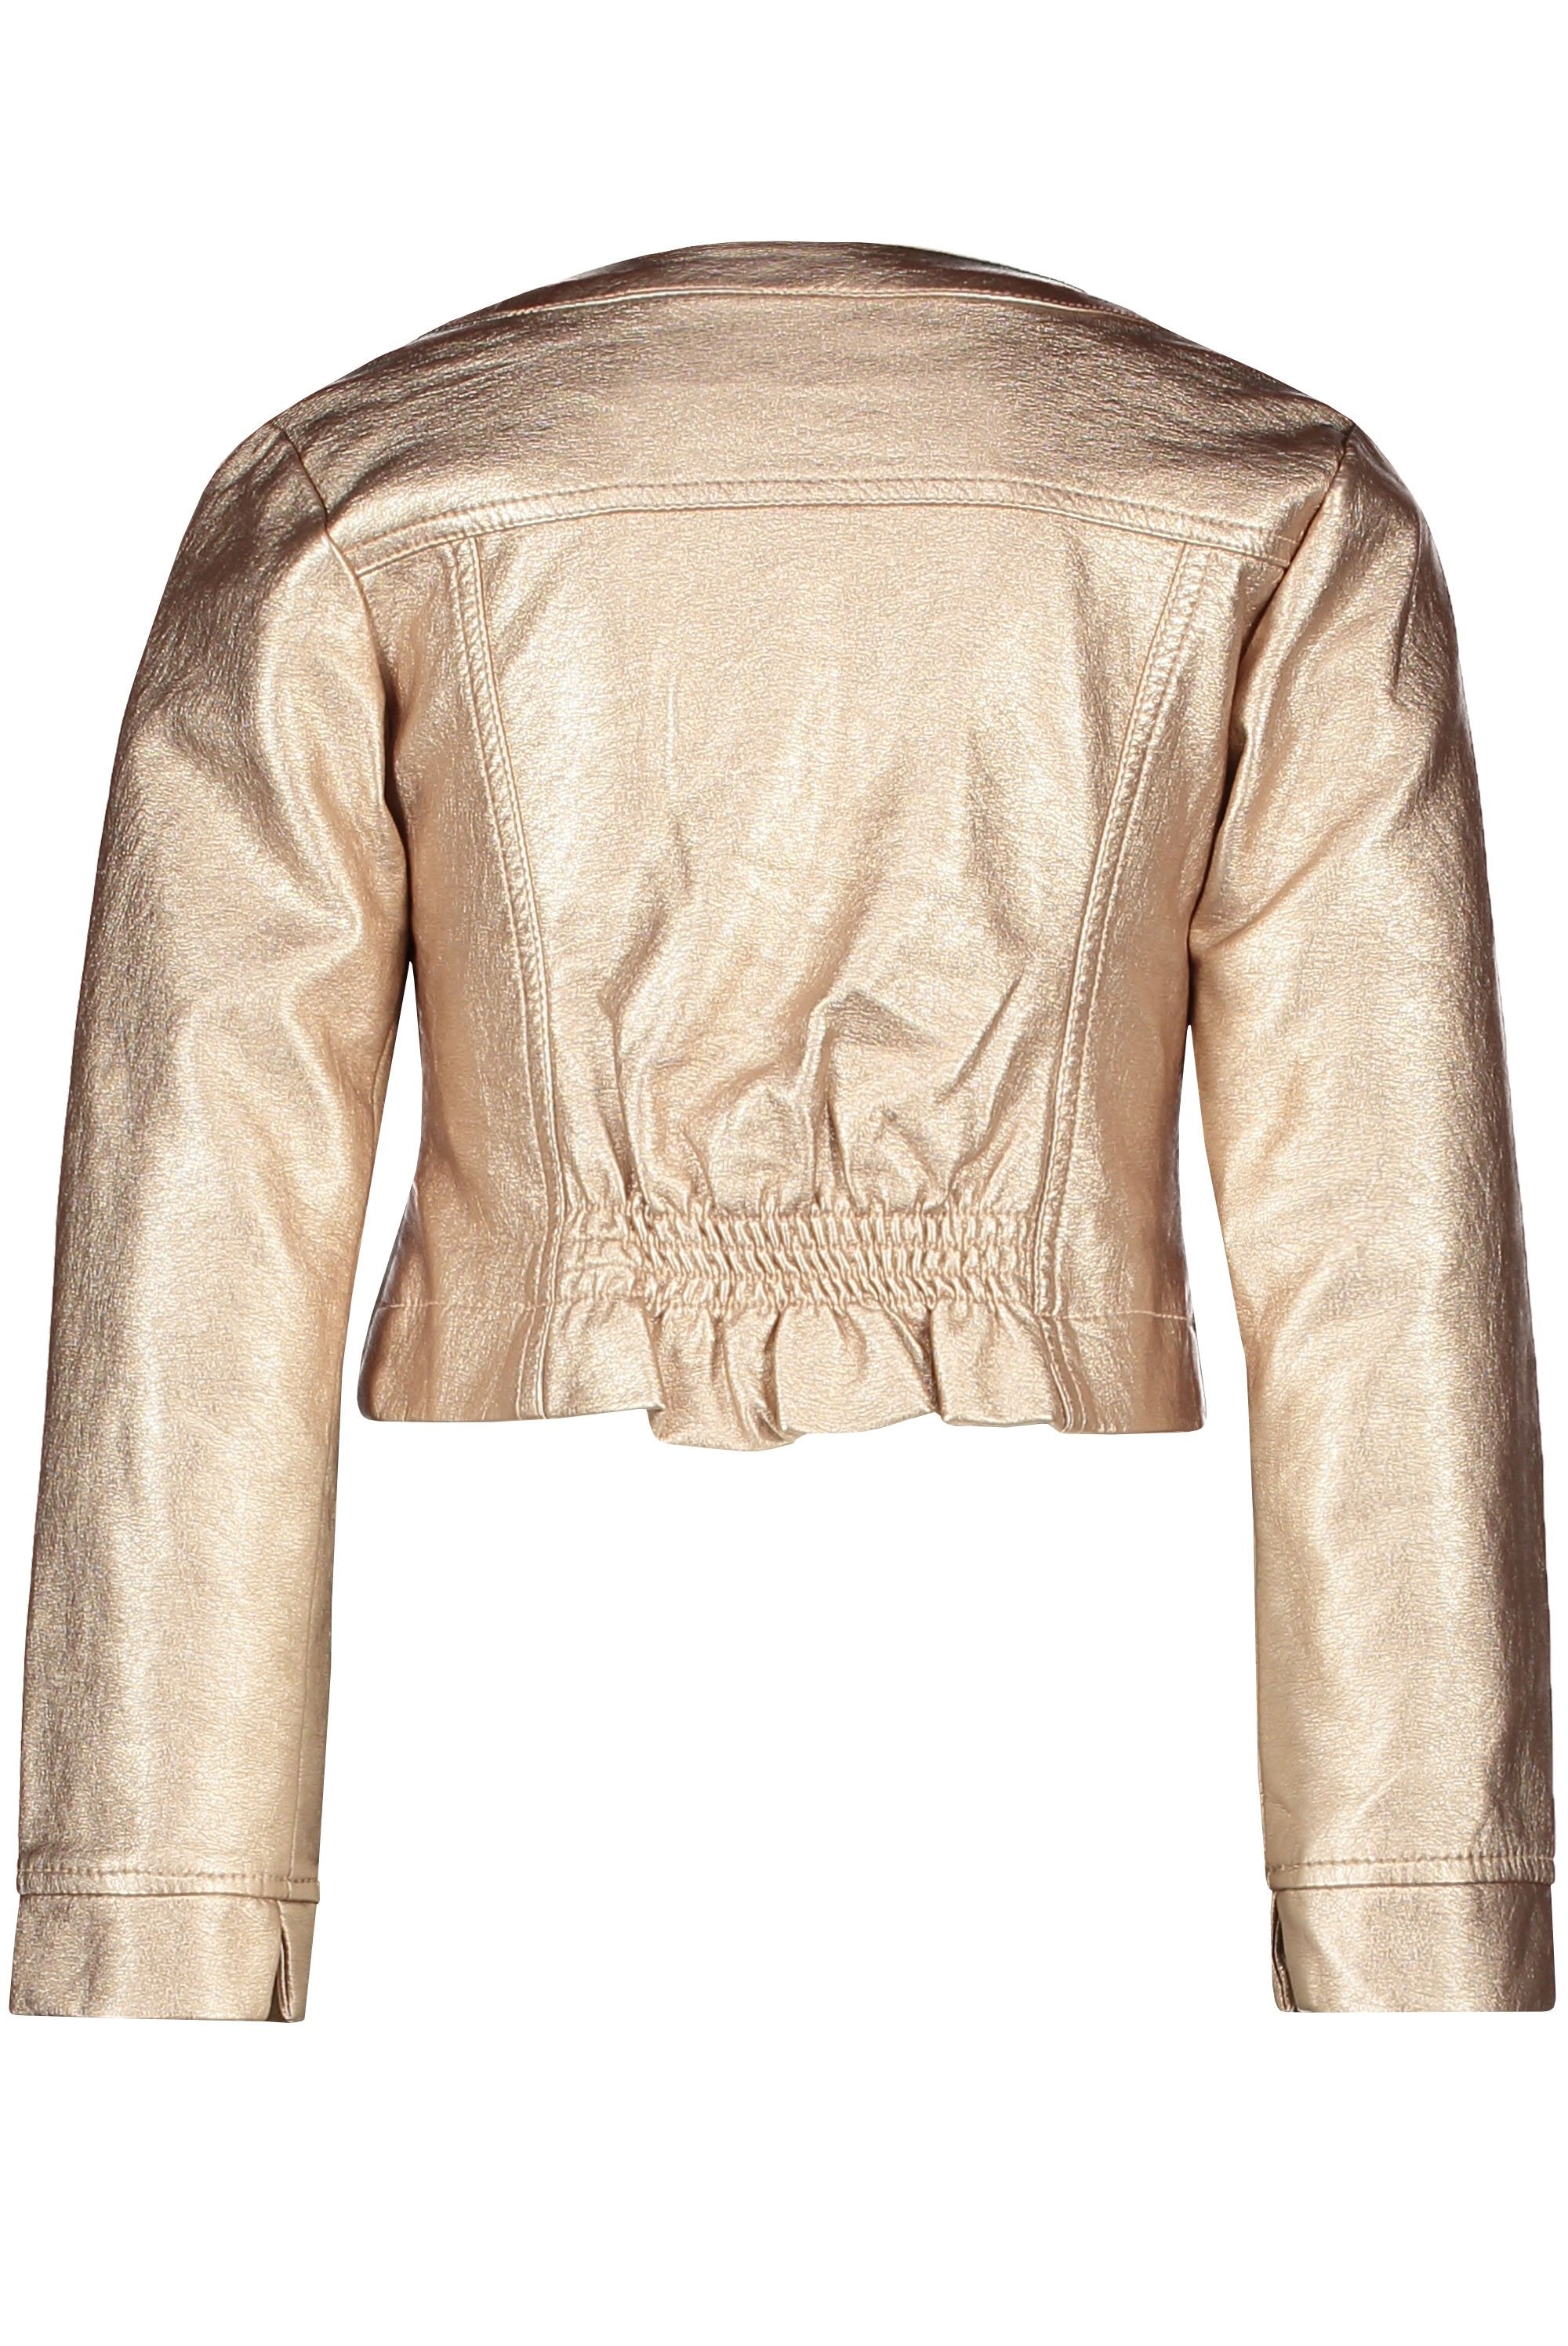 Meisjes Flo girls imi leather jacket van Like Flo in de kleur Metallic in maat 140.